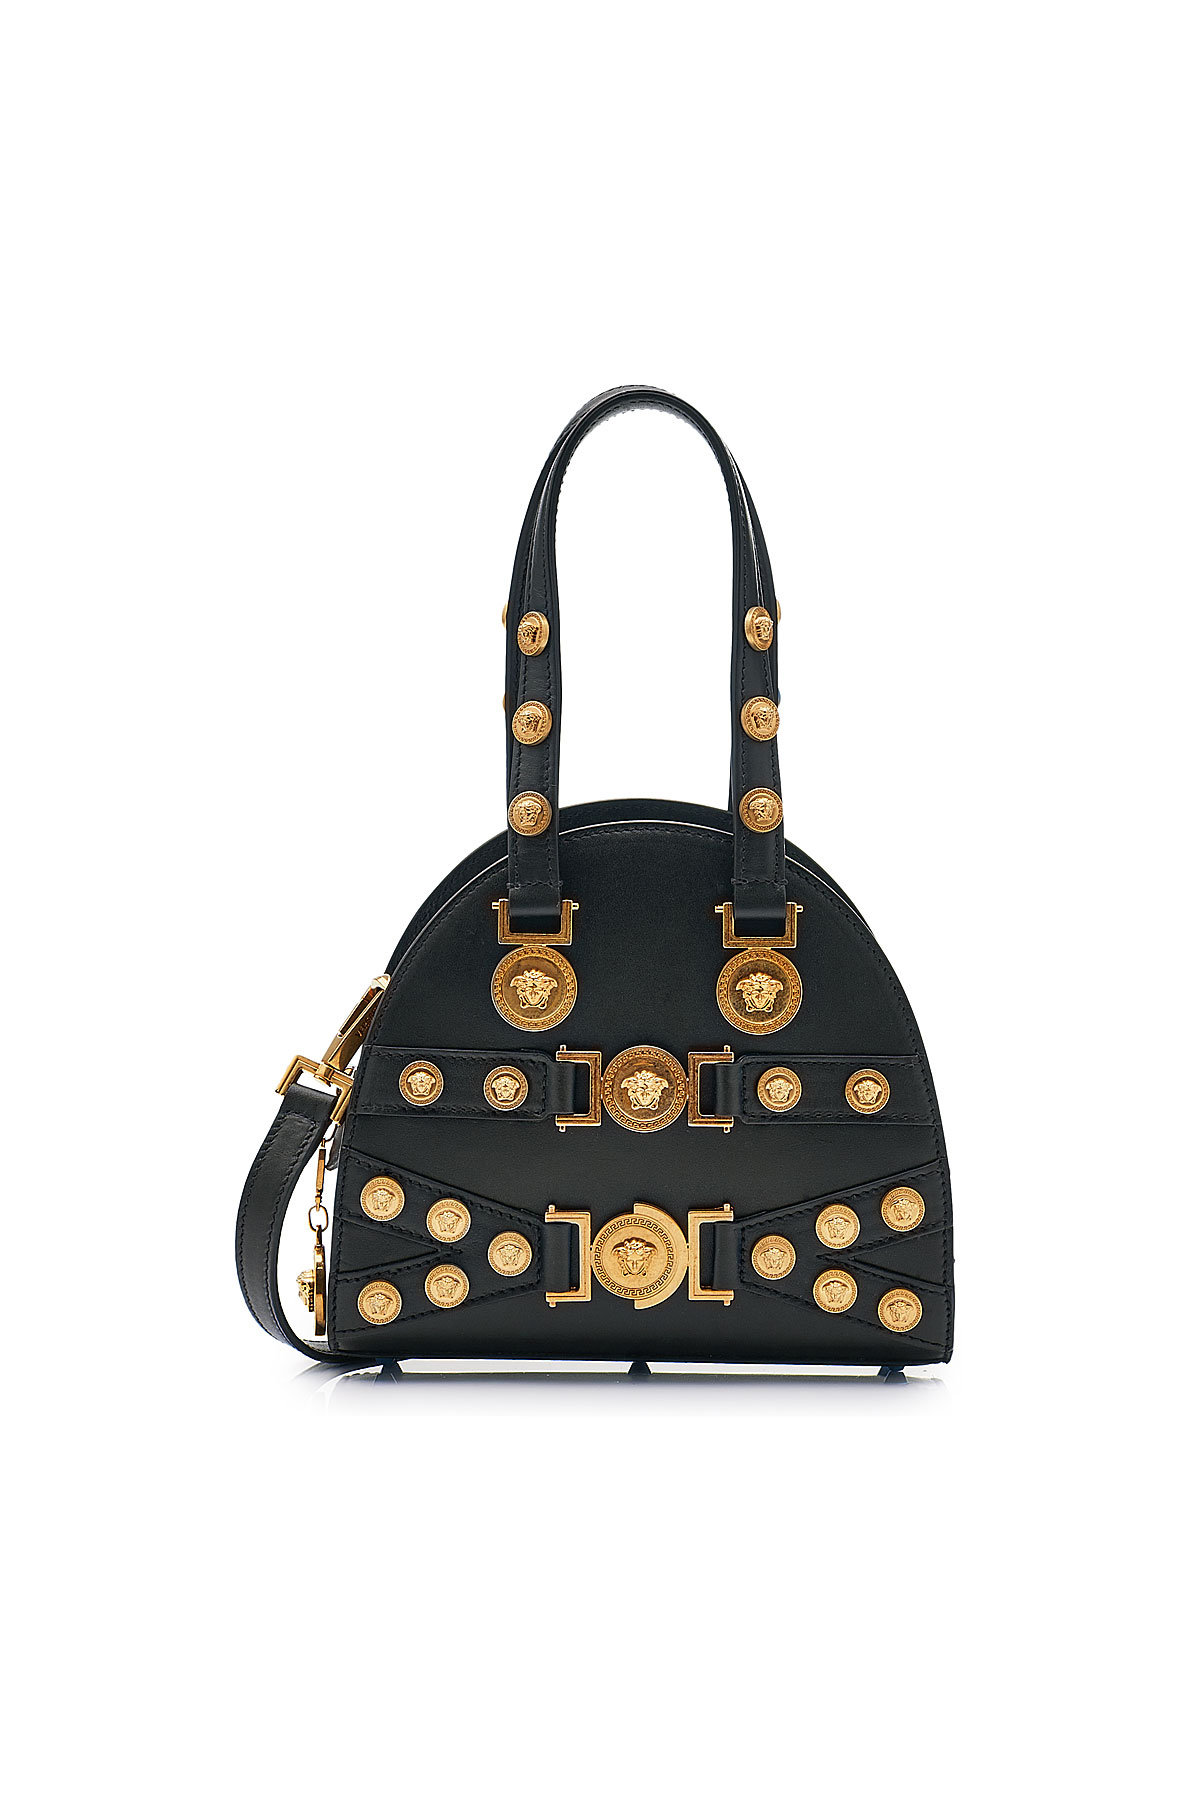 Versace - Top Handle Embellished Leather Bag